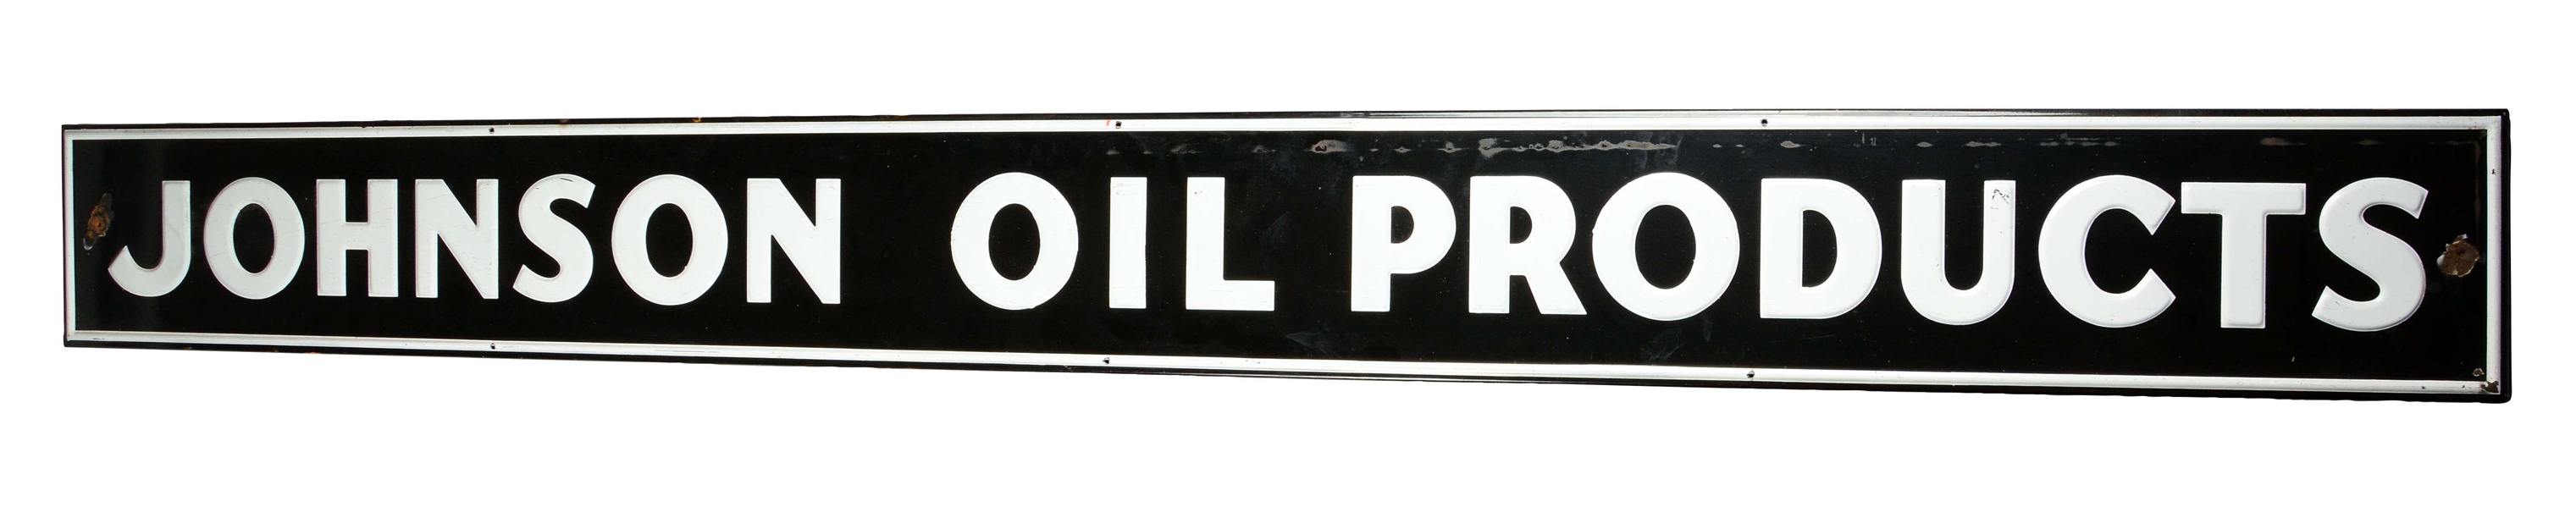 JOHNSON OIL PRODUCTS PORCELAIN STRIP SIGN.